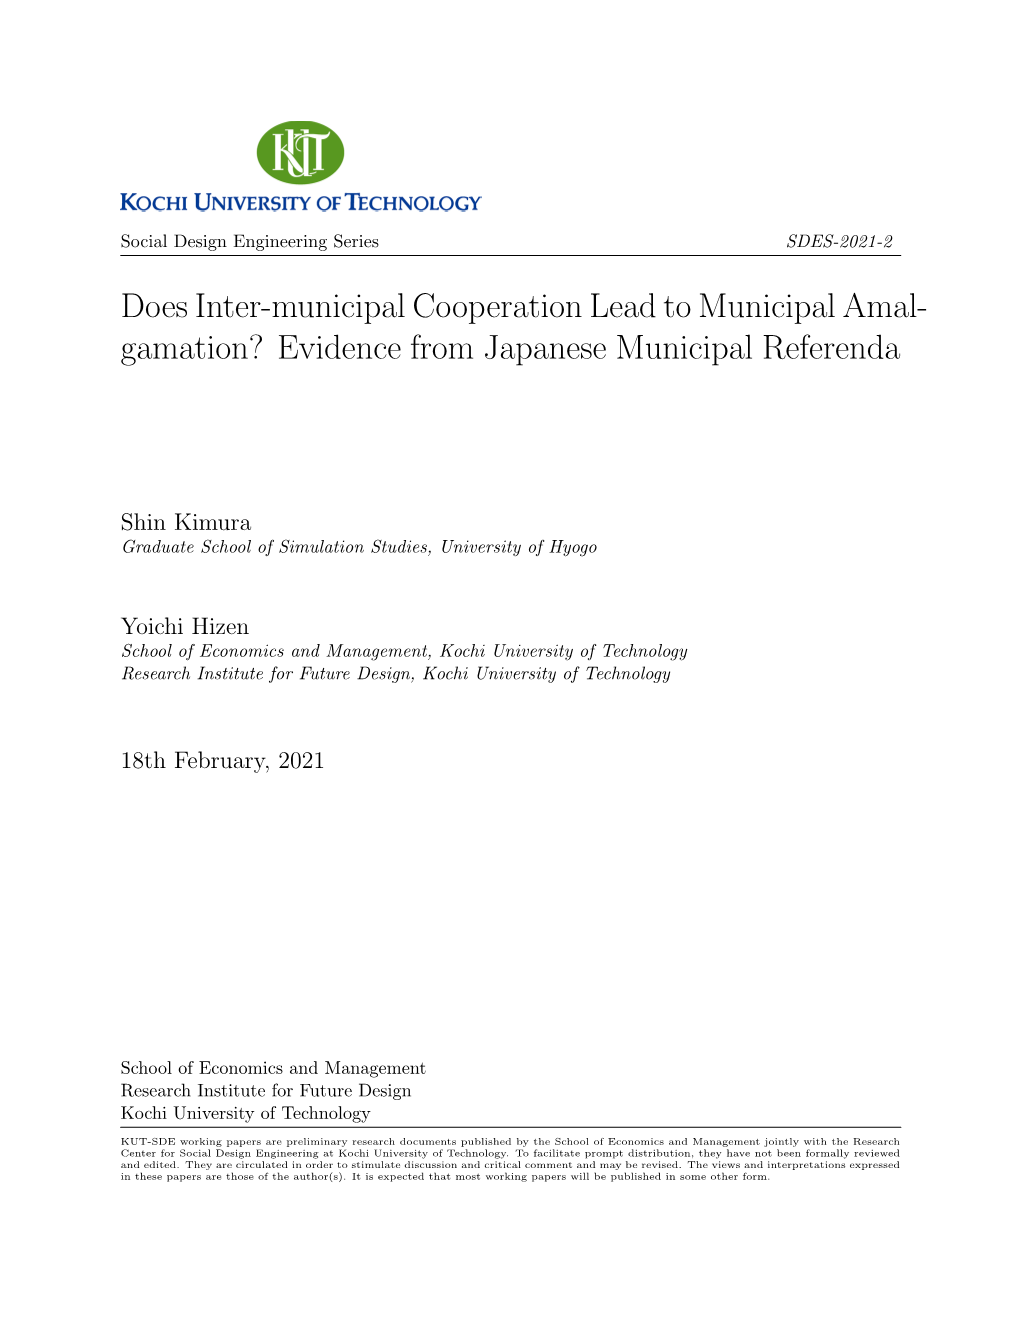 Evidence from Japanese Municipal Referenda